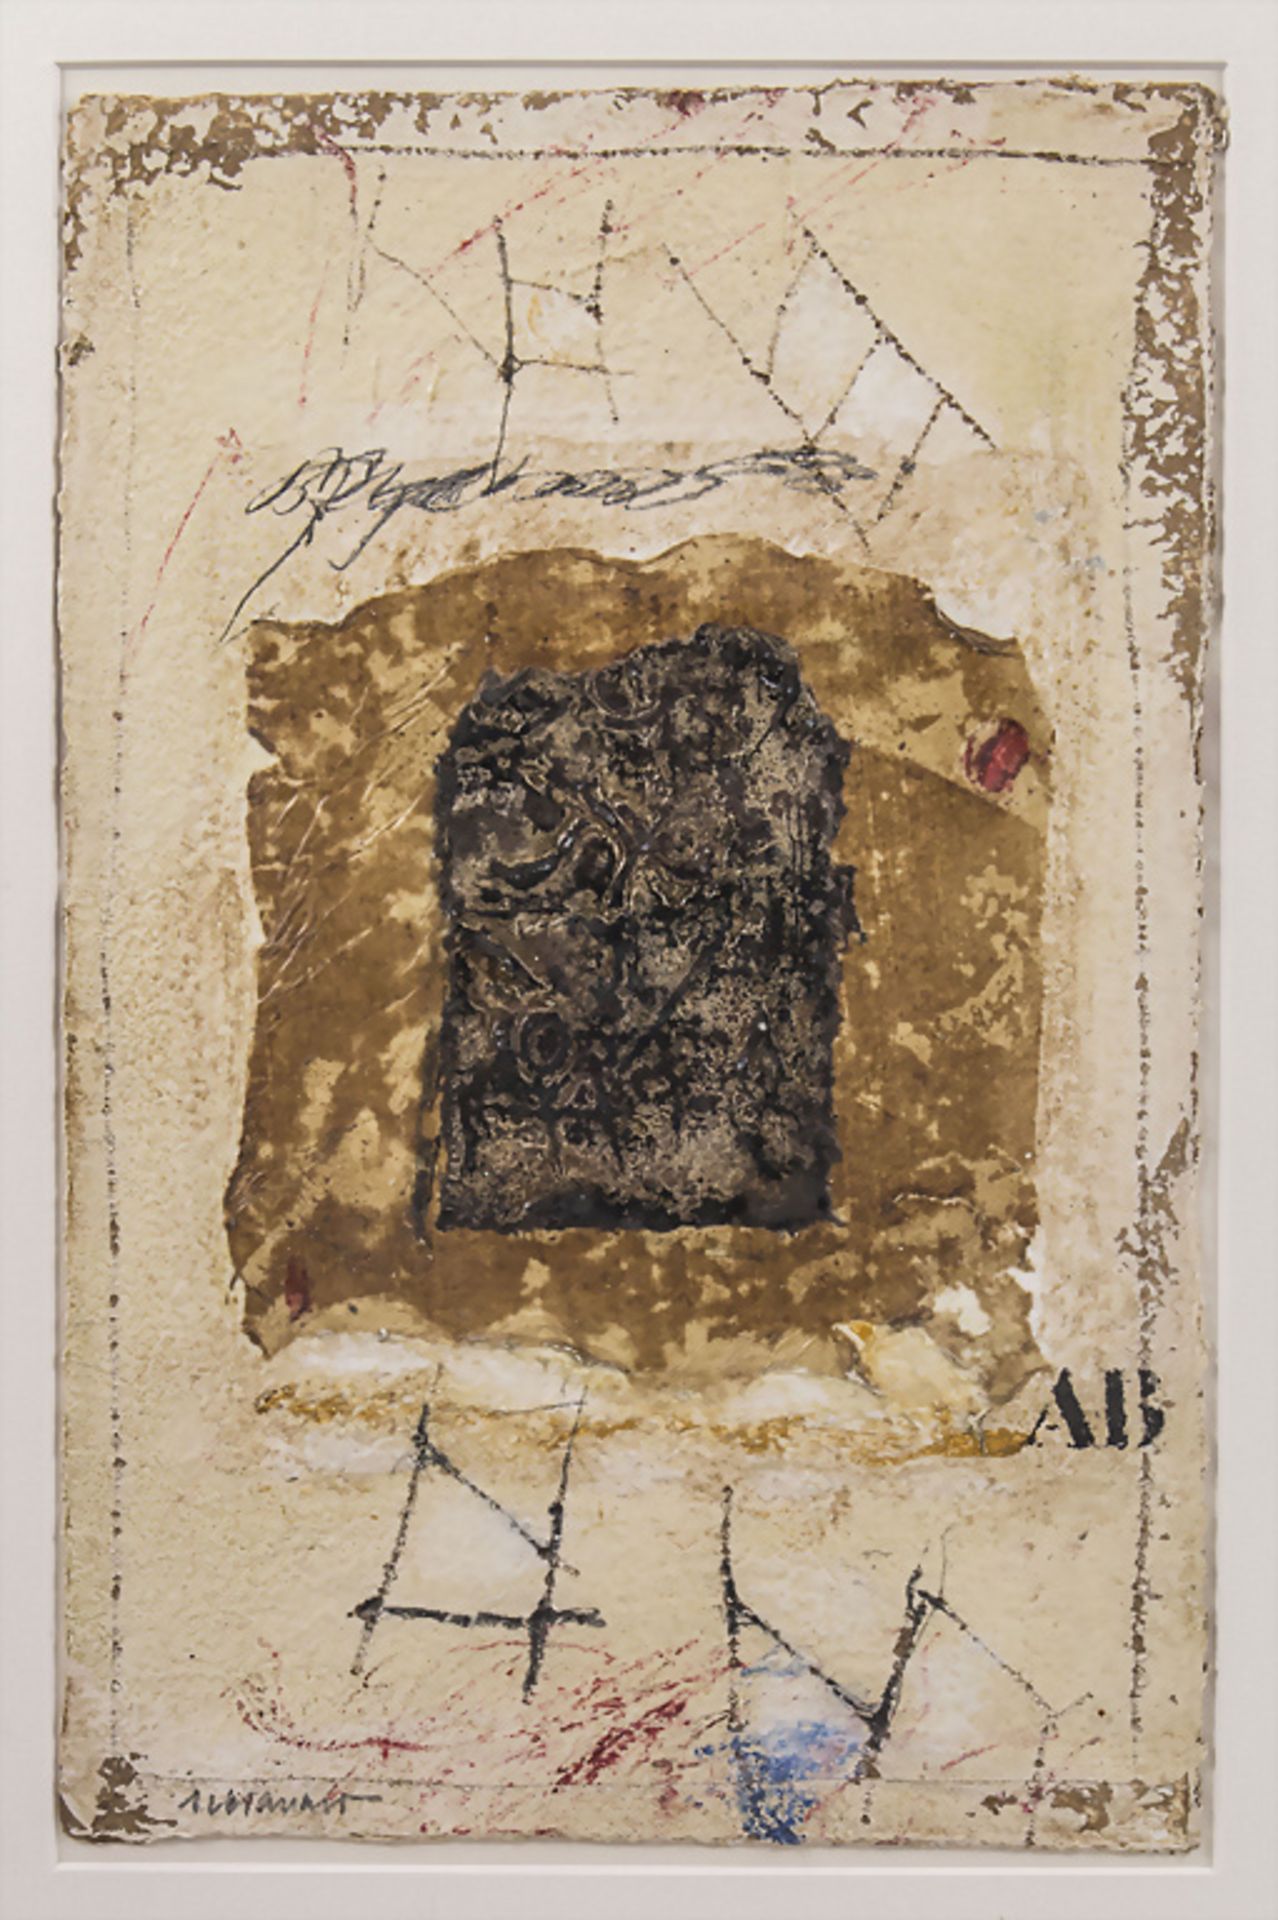 James COIGNARD (1925-2008), 'La composition abstraite' / 'The abstract composition', 1993